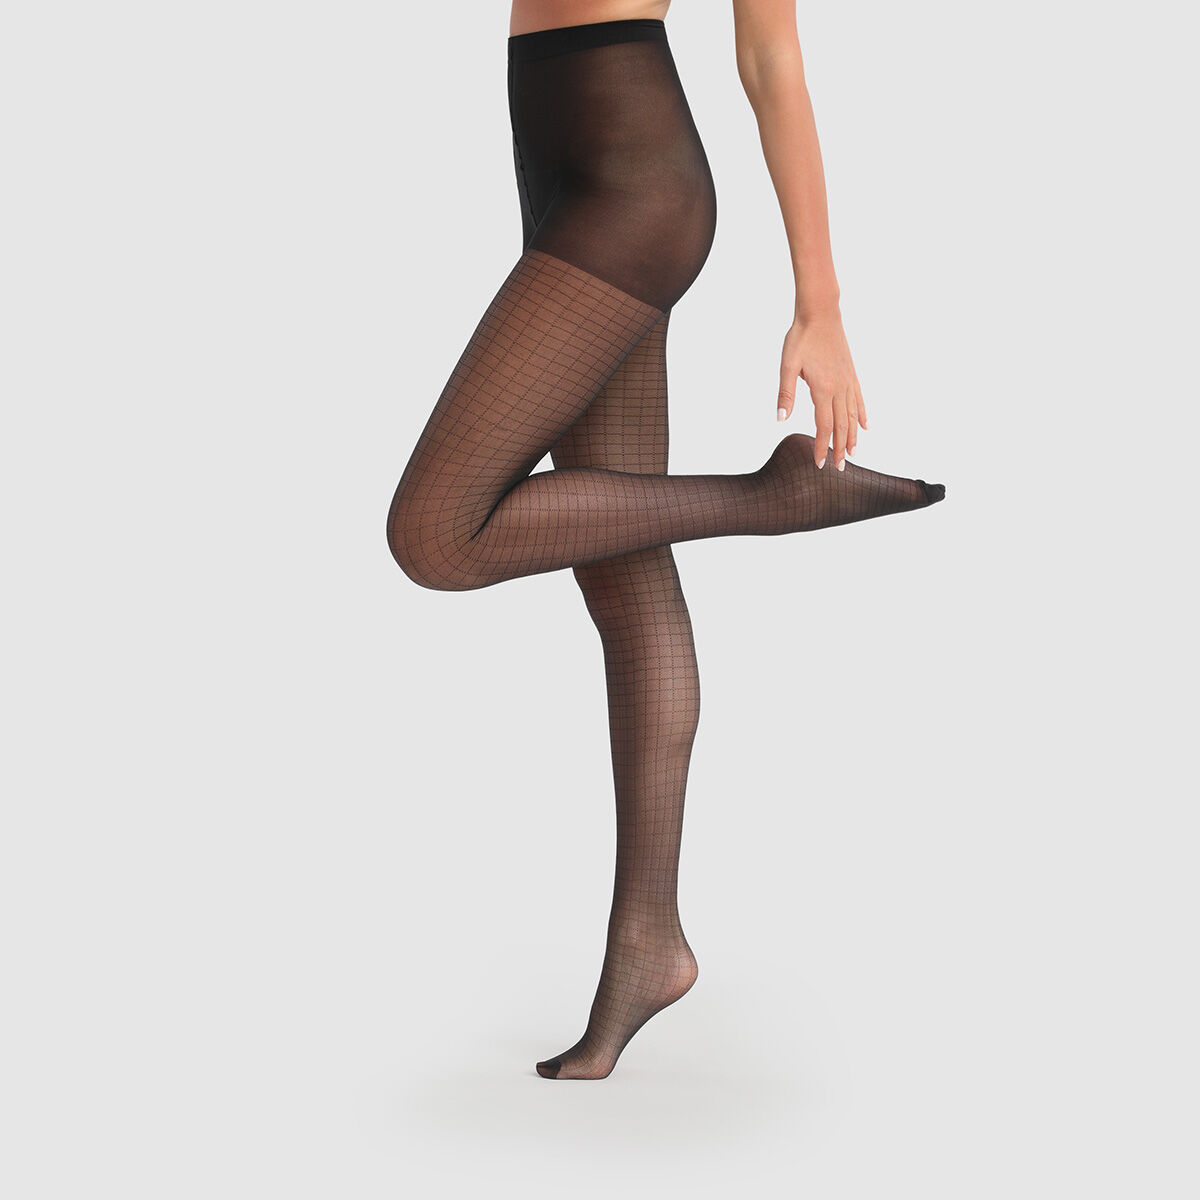 Size 35/41 DIM Women's Sulbim Voile Brillant X2 Tights/Hold-Up Stocking Black 